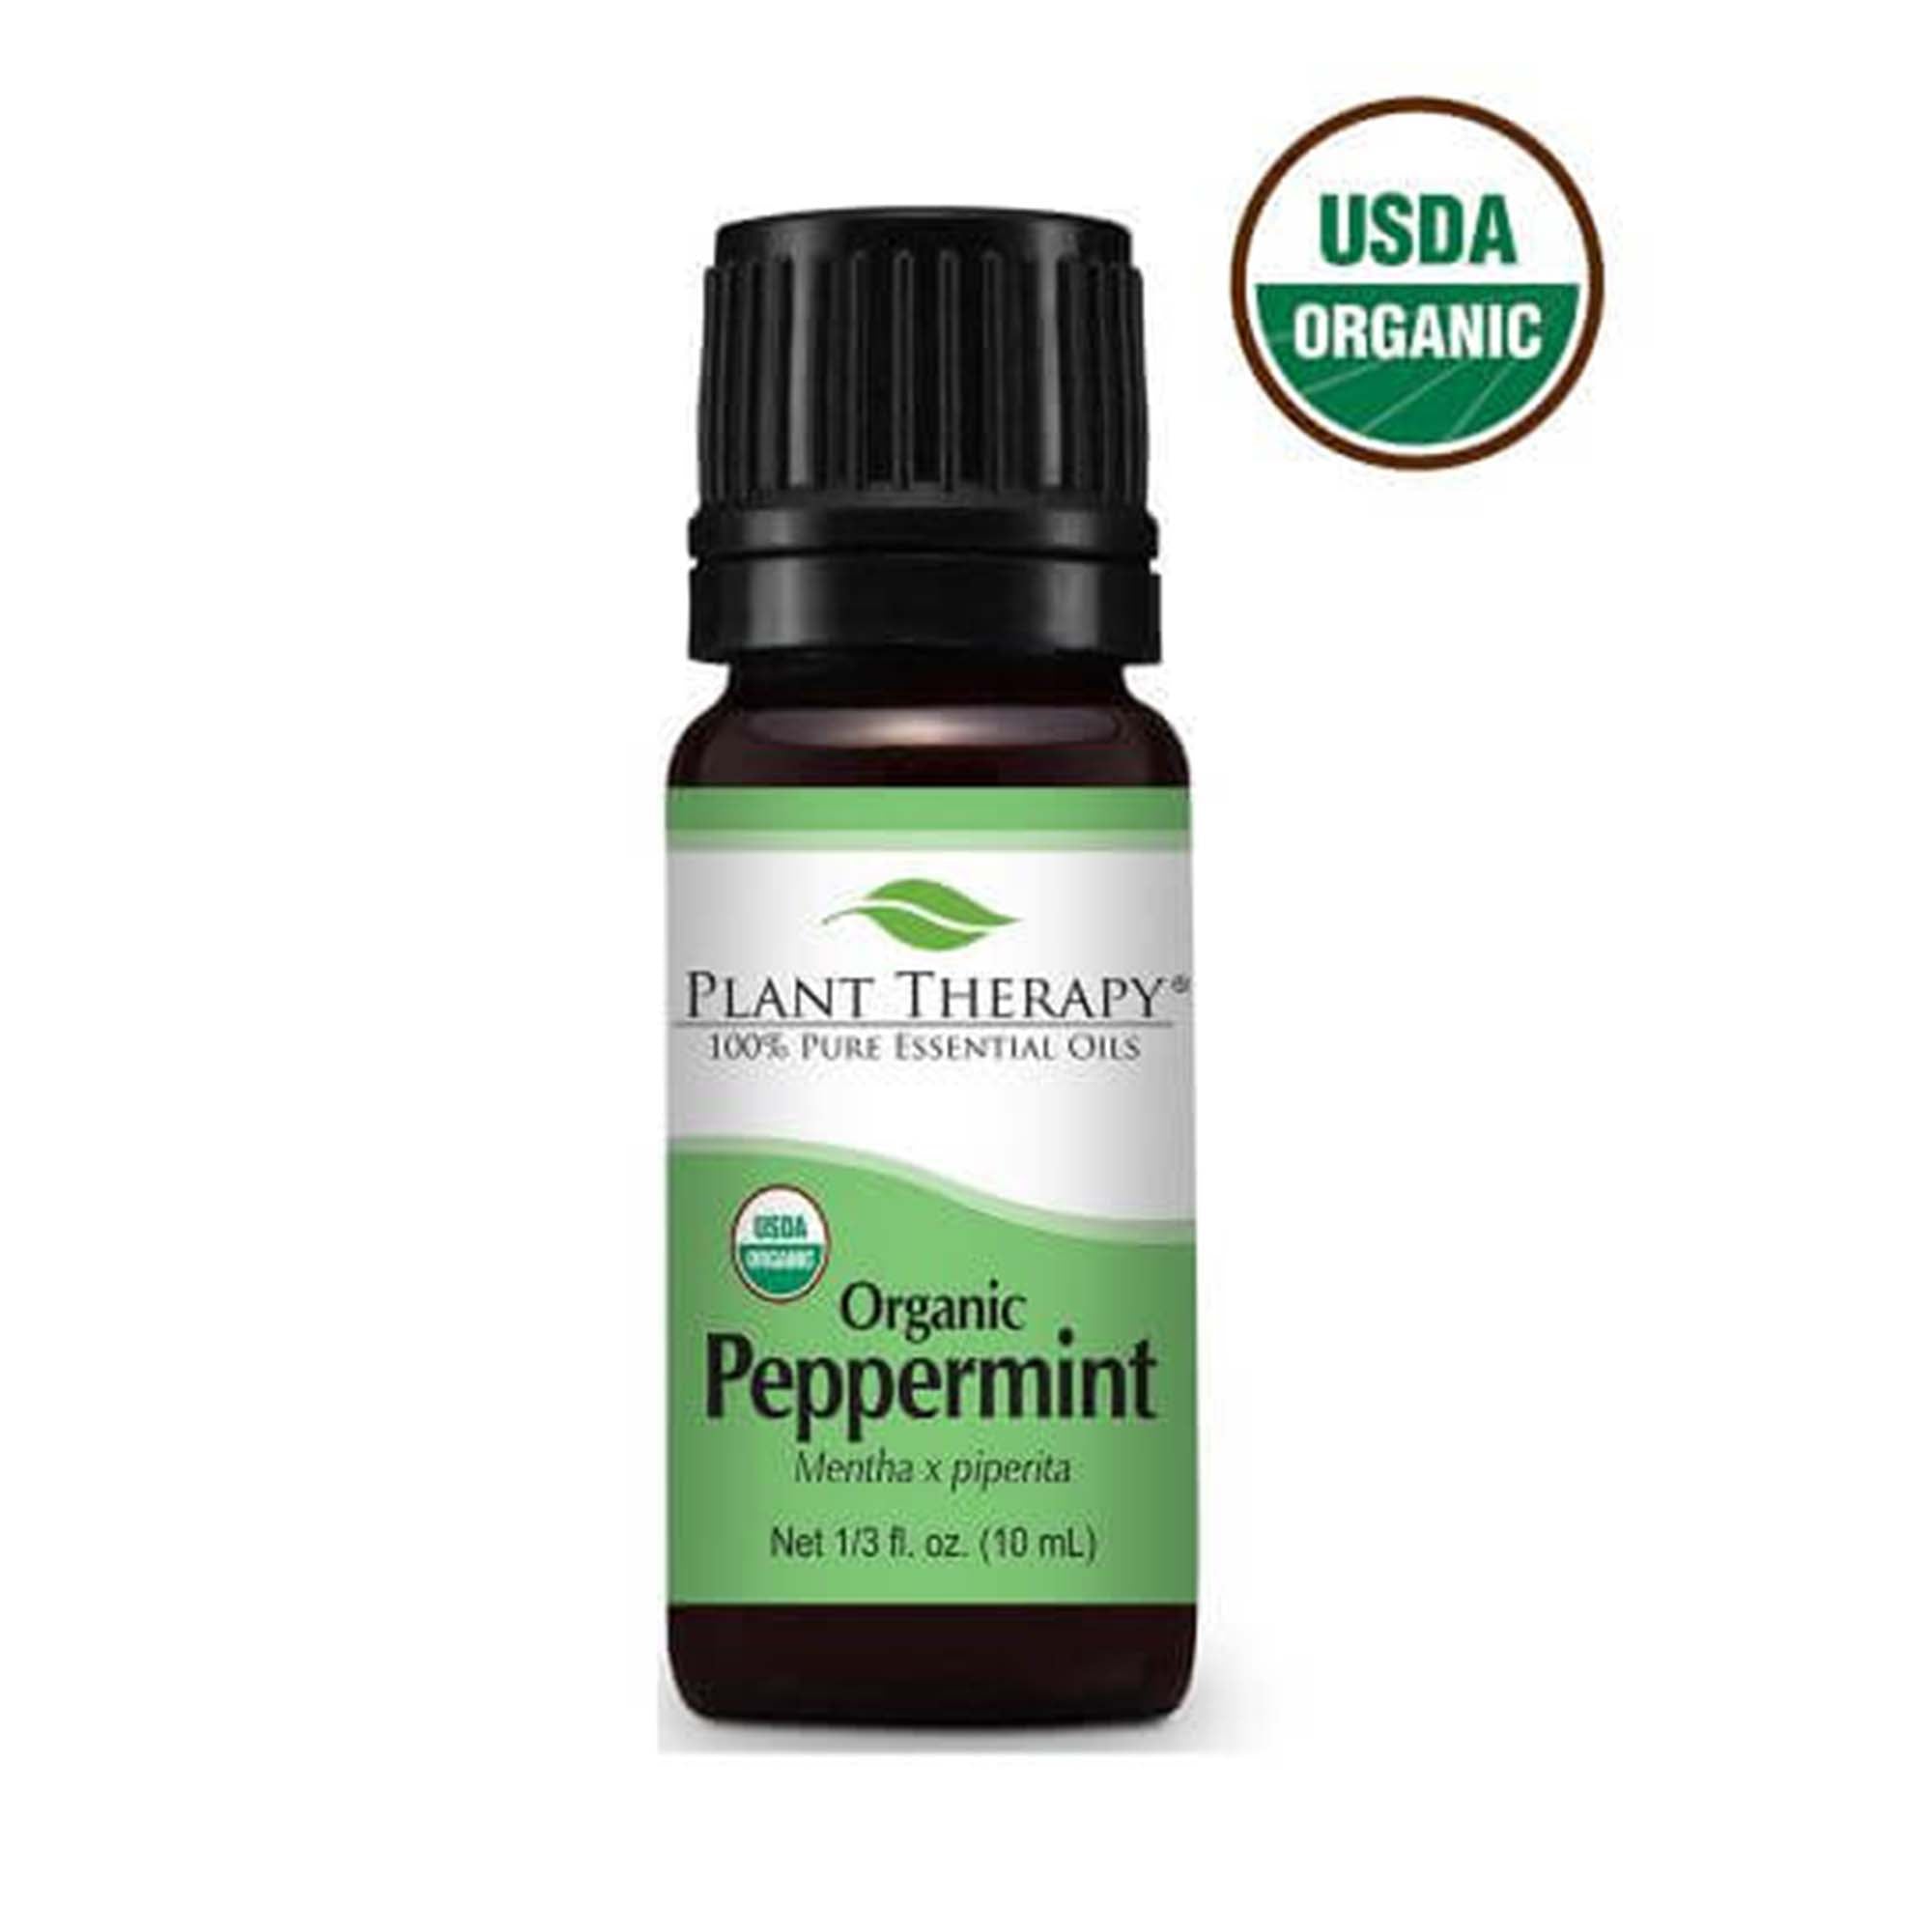 Peppermint Essential Oil 30ml